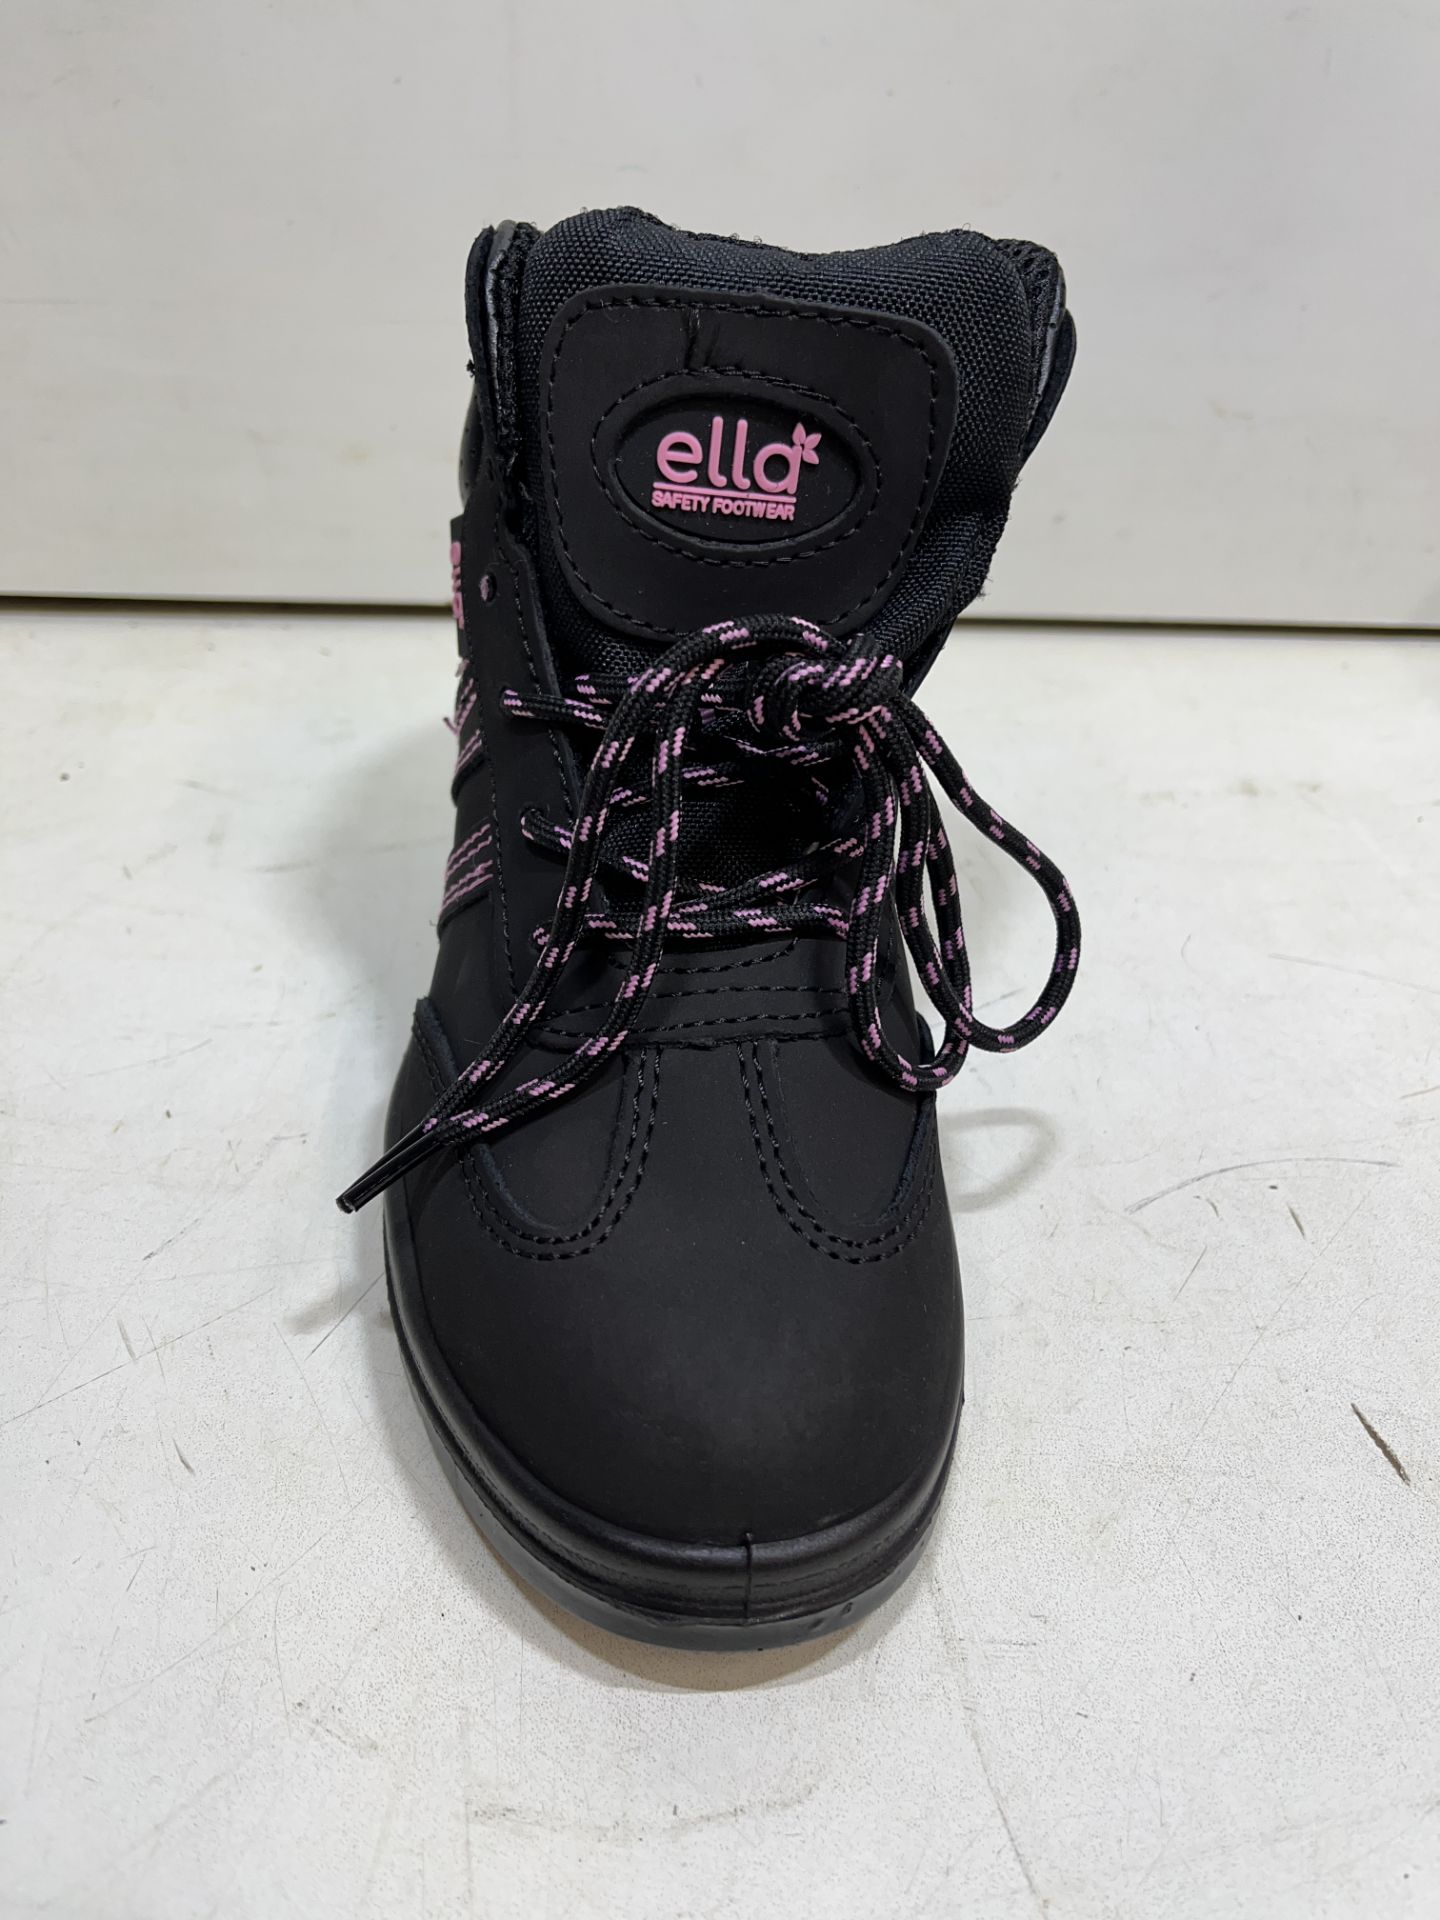 Ella Safety Boots | UK 3 - Image 3 of 4